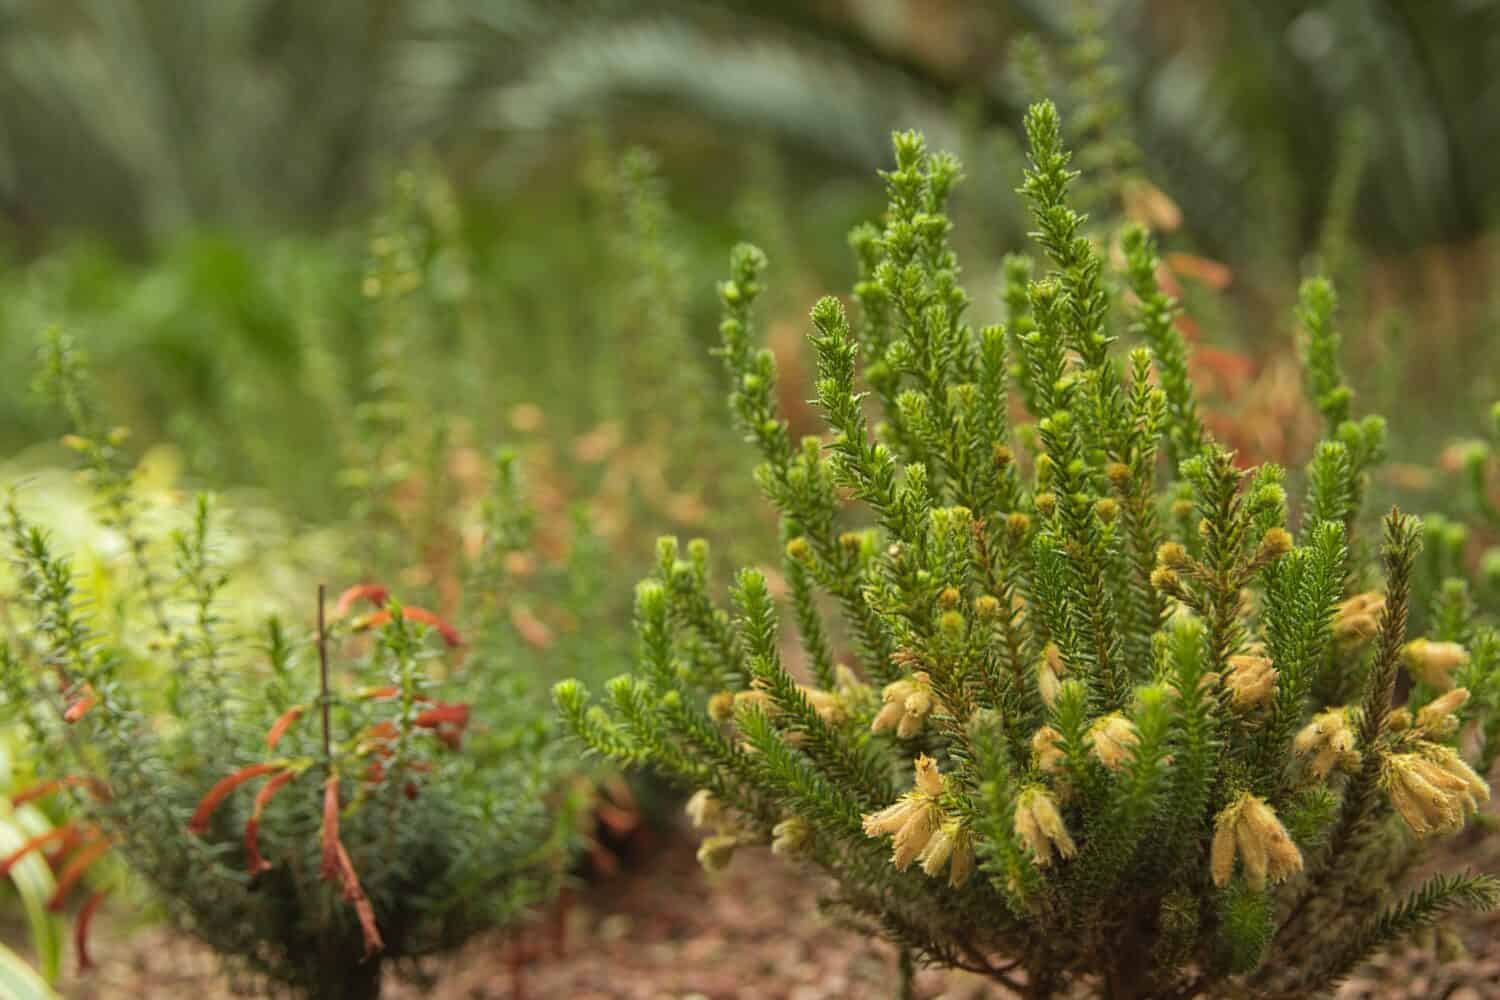 A view of a erica scoparia plant